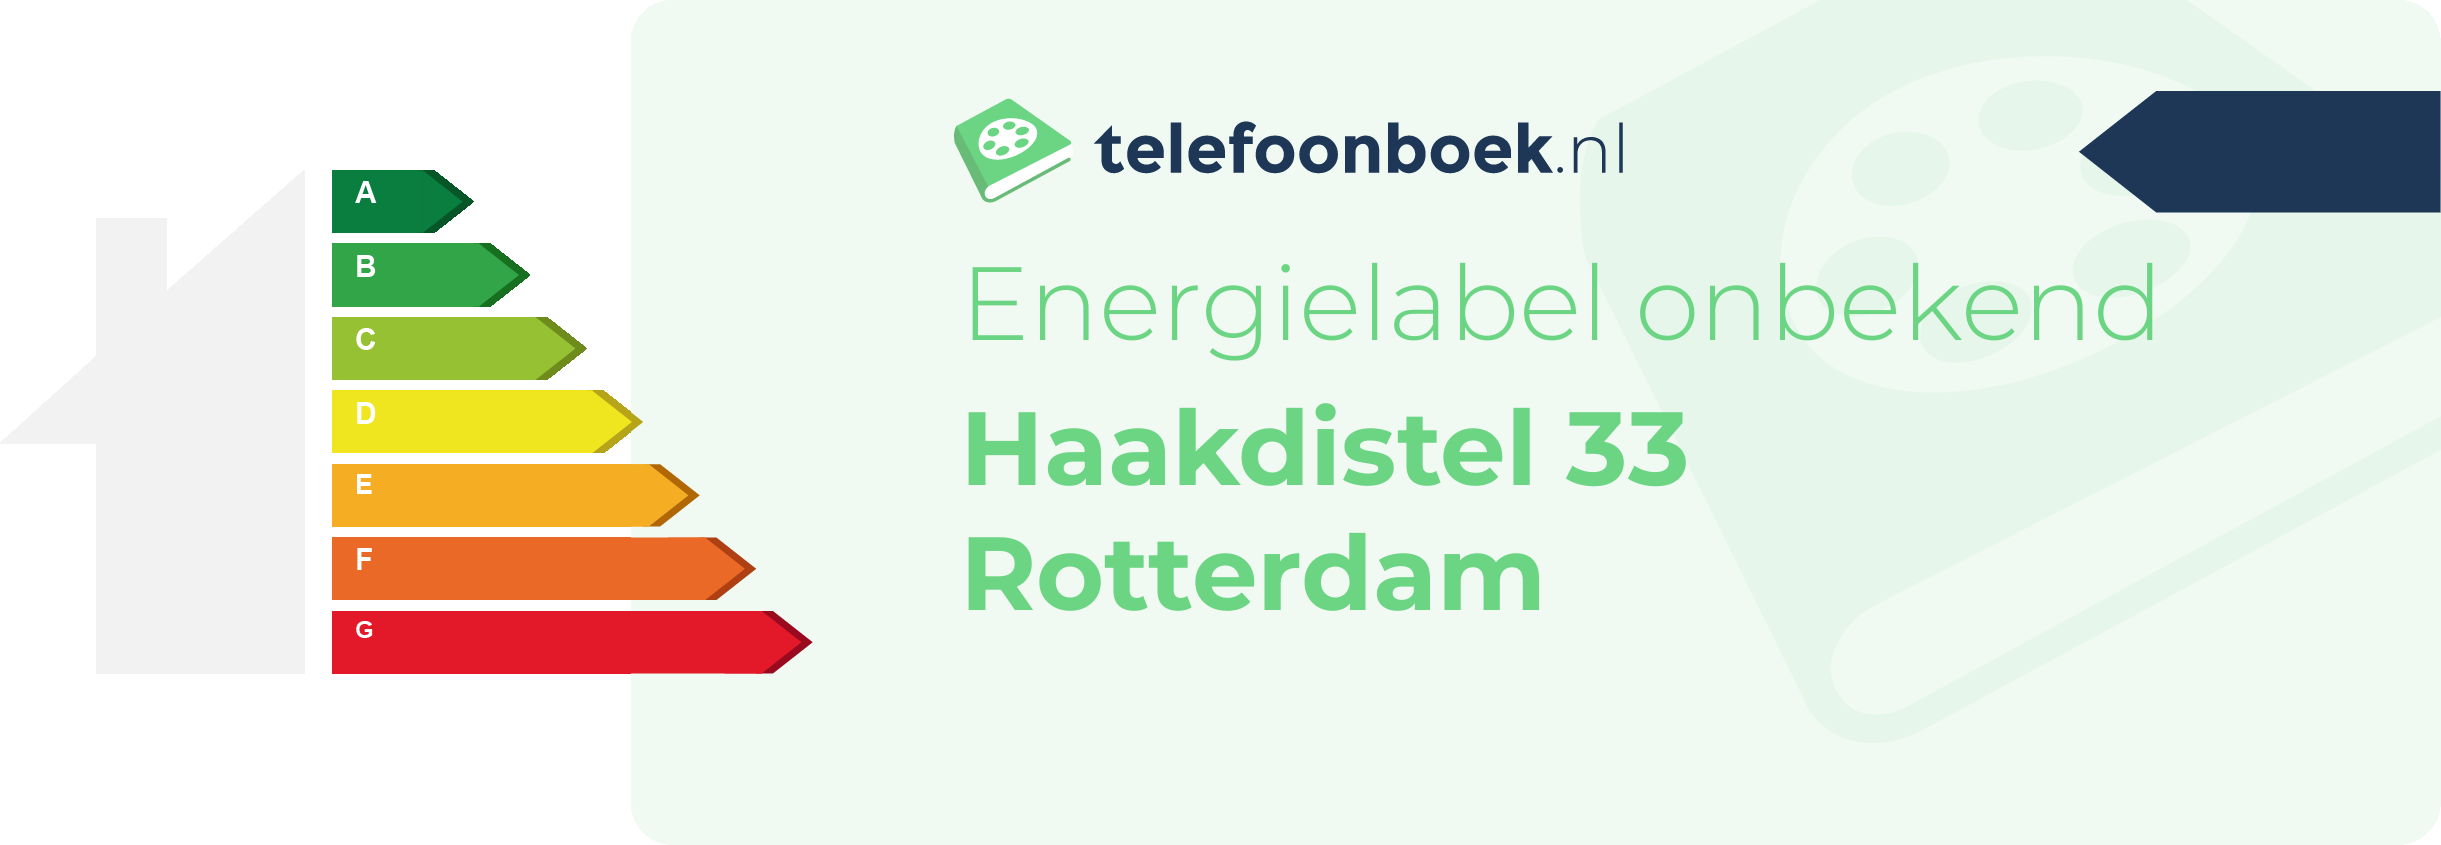 Energielabel Haakdistel 33 Rotterdam